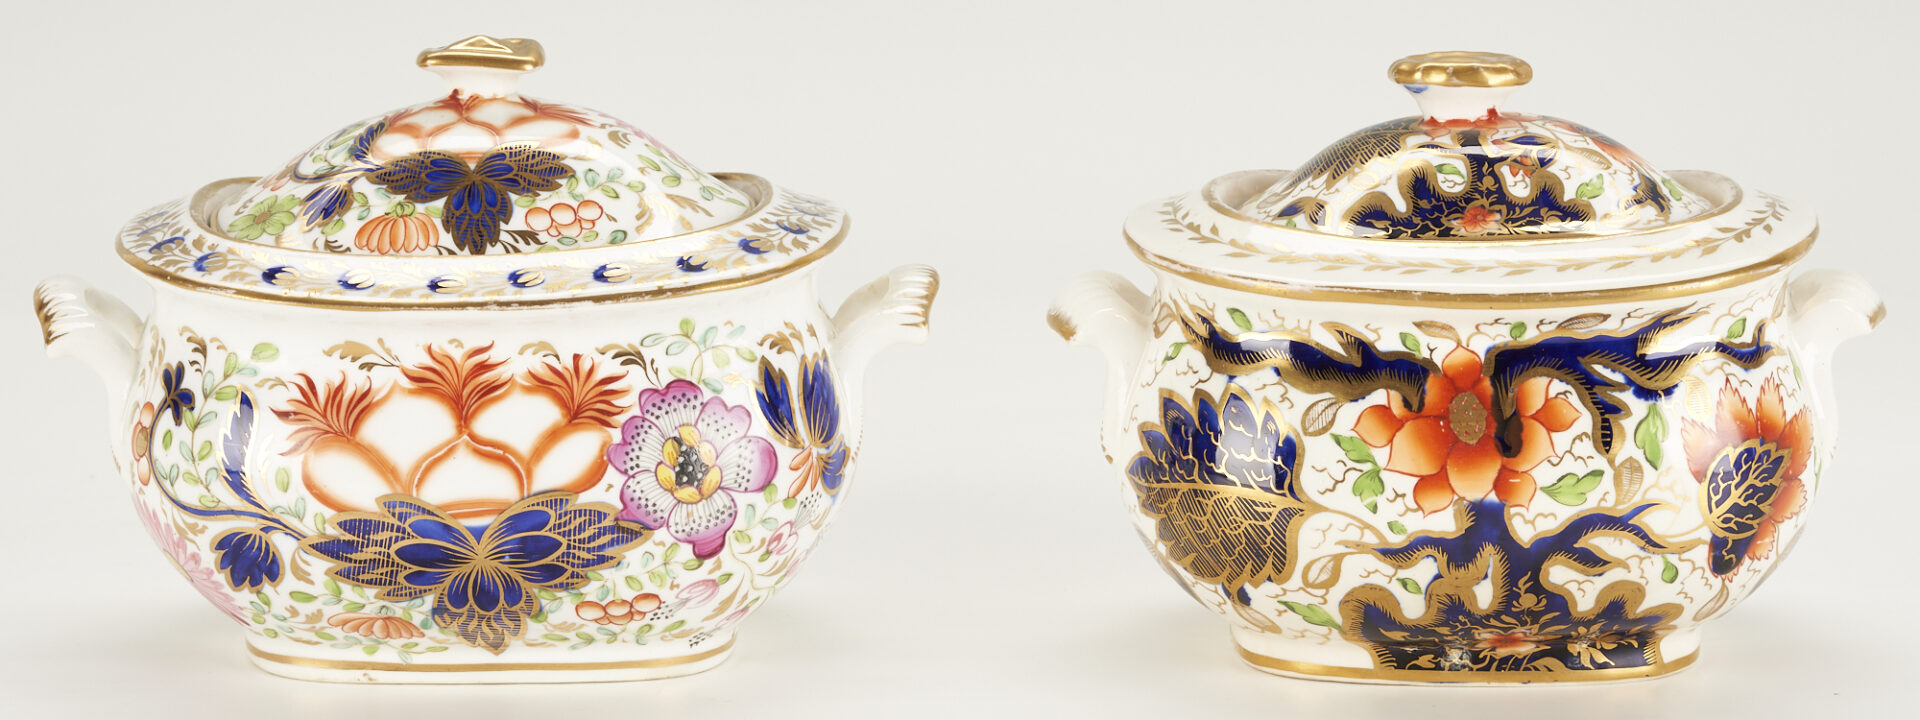 Lot 1006: 47 Assorted English Porcelain Tea Service Items, Imari Palette